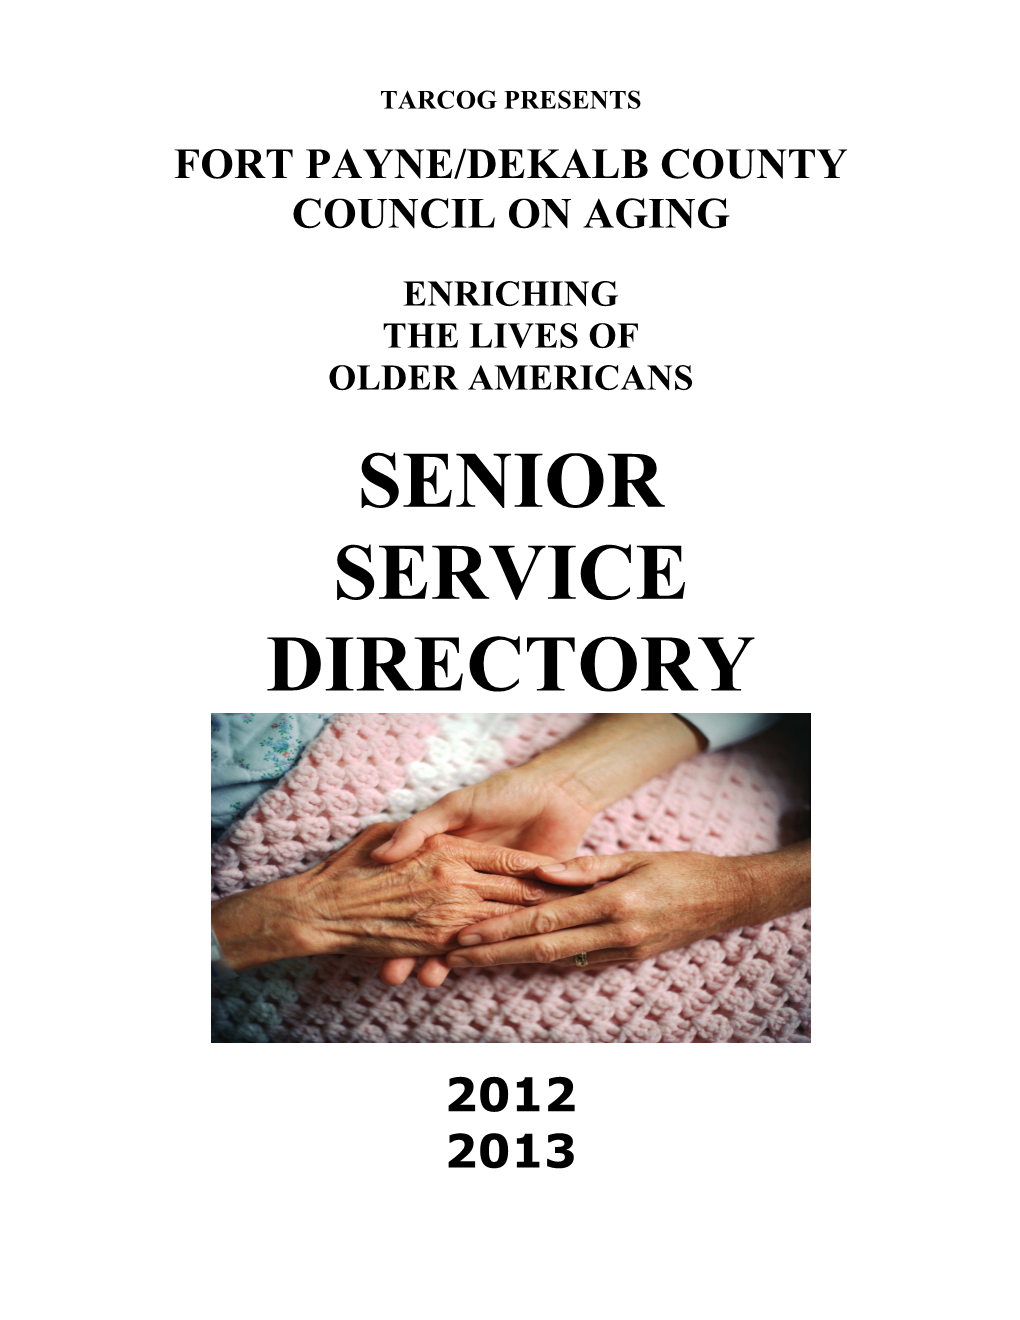 Dekalb County Senior Services Directory